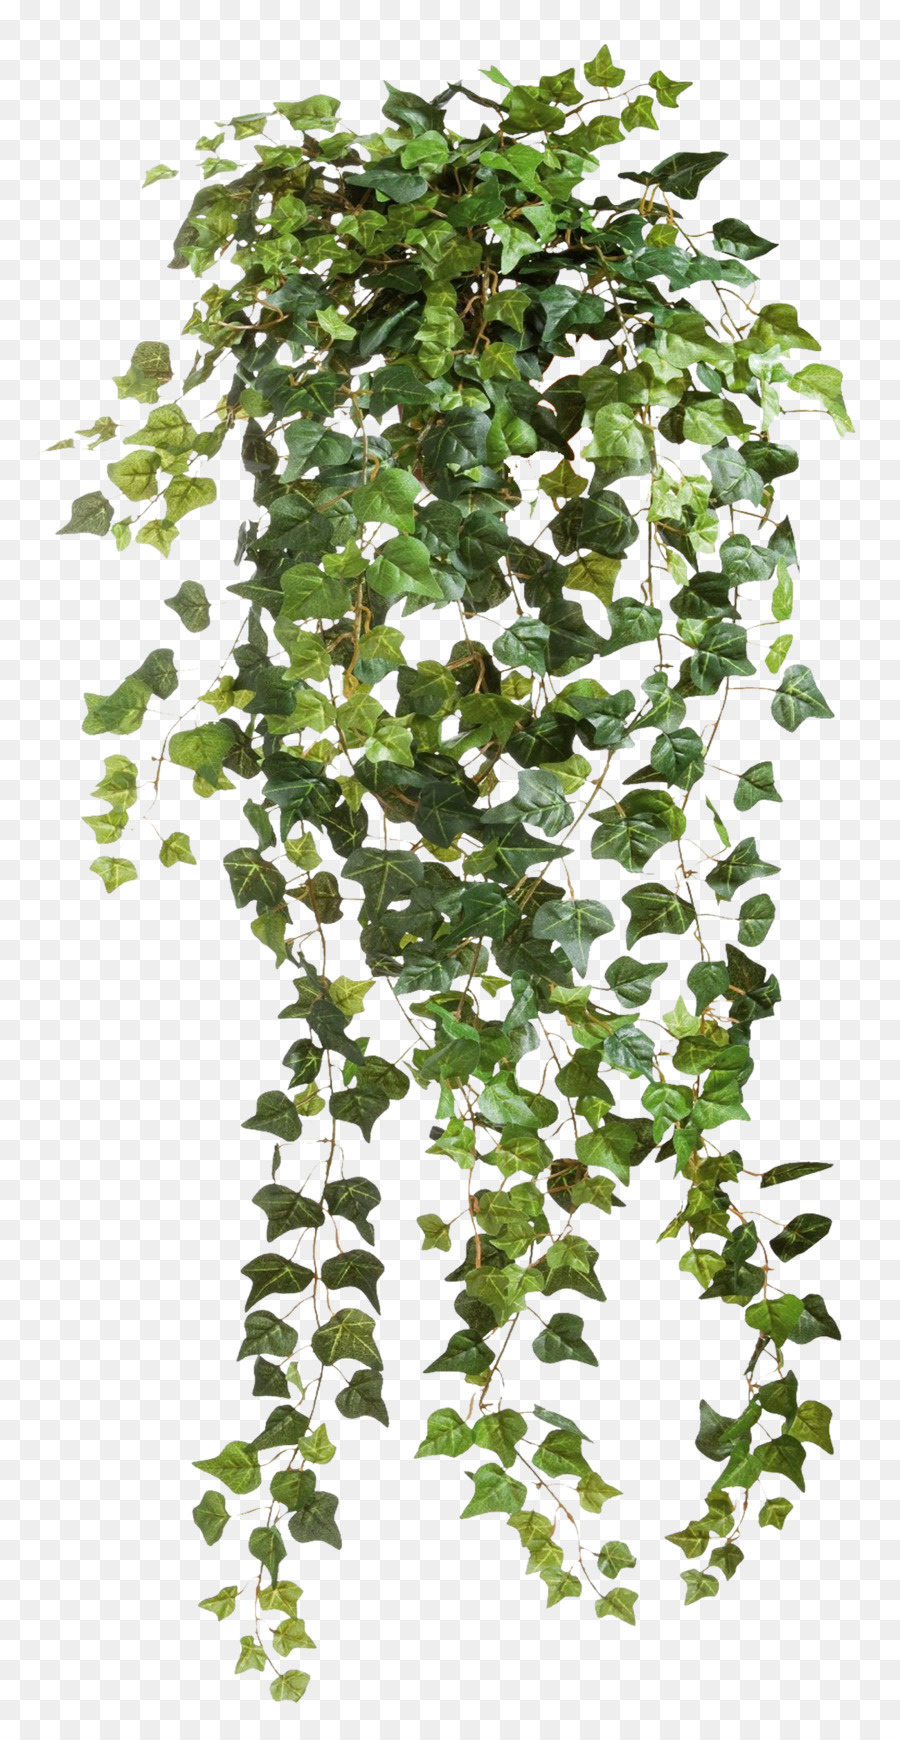 Ivy Plant Clip art - Ivy Vines Clear Cut Png png download - 900*1731 - Free Transparent Ivy png Download.